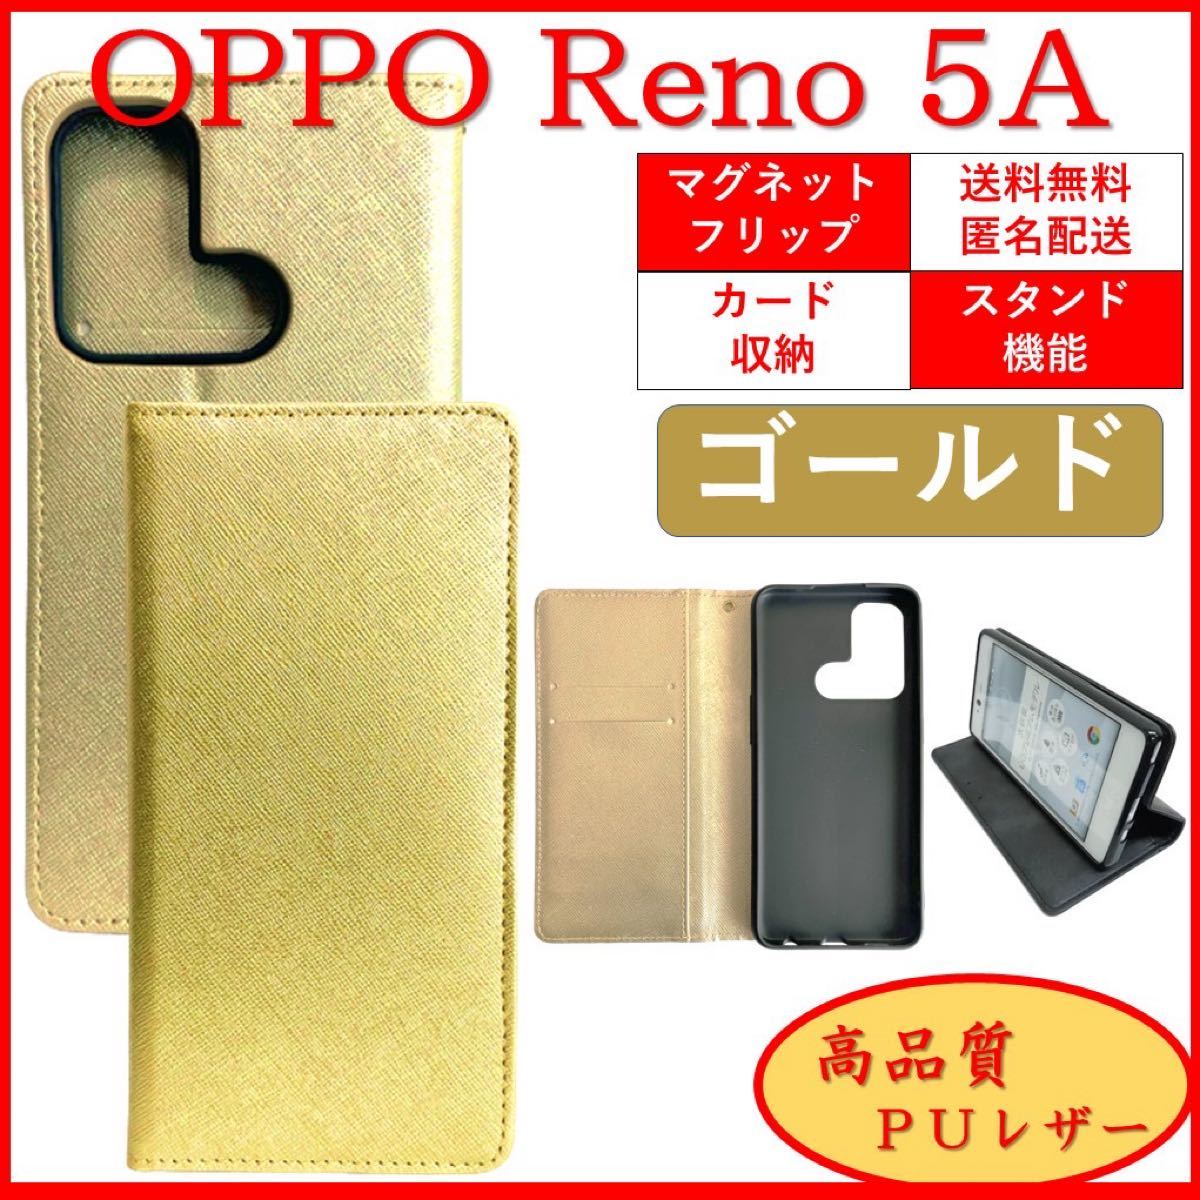 PUレザー手帳型スマホケース OPPO Reno A 対応 ゴールド